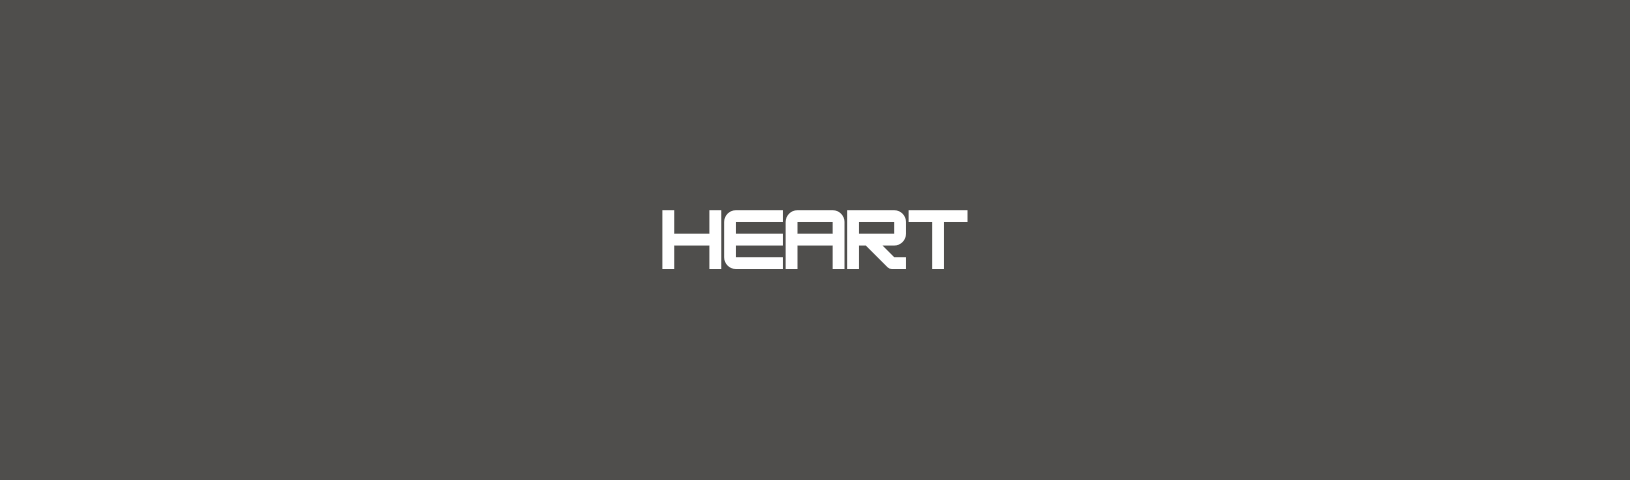 HEART Background Image